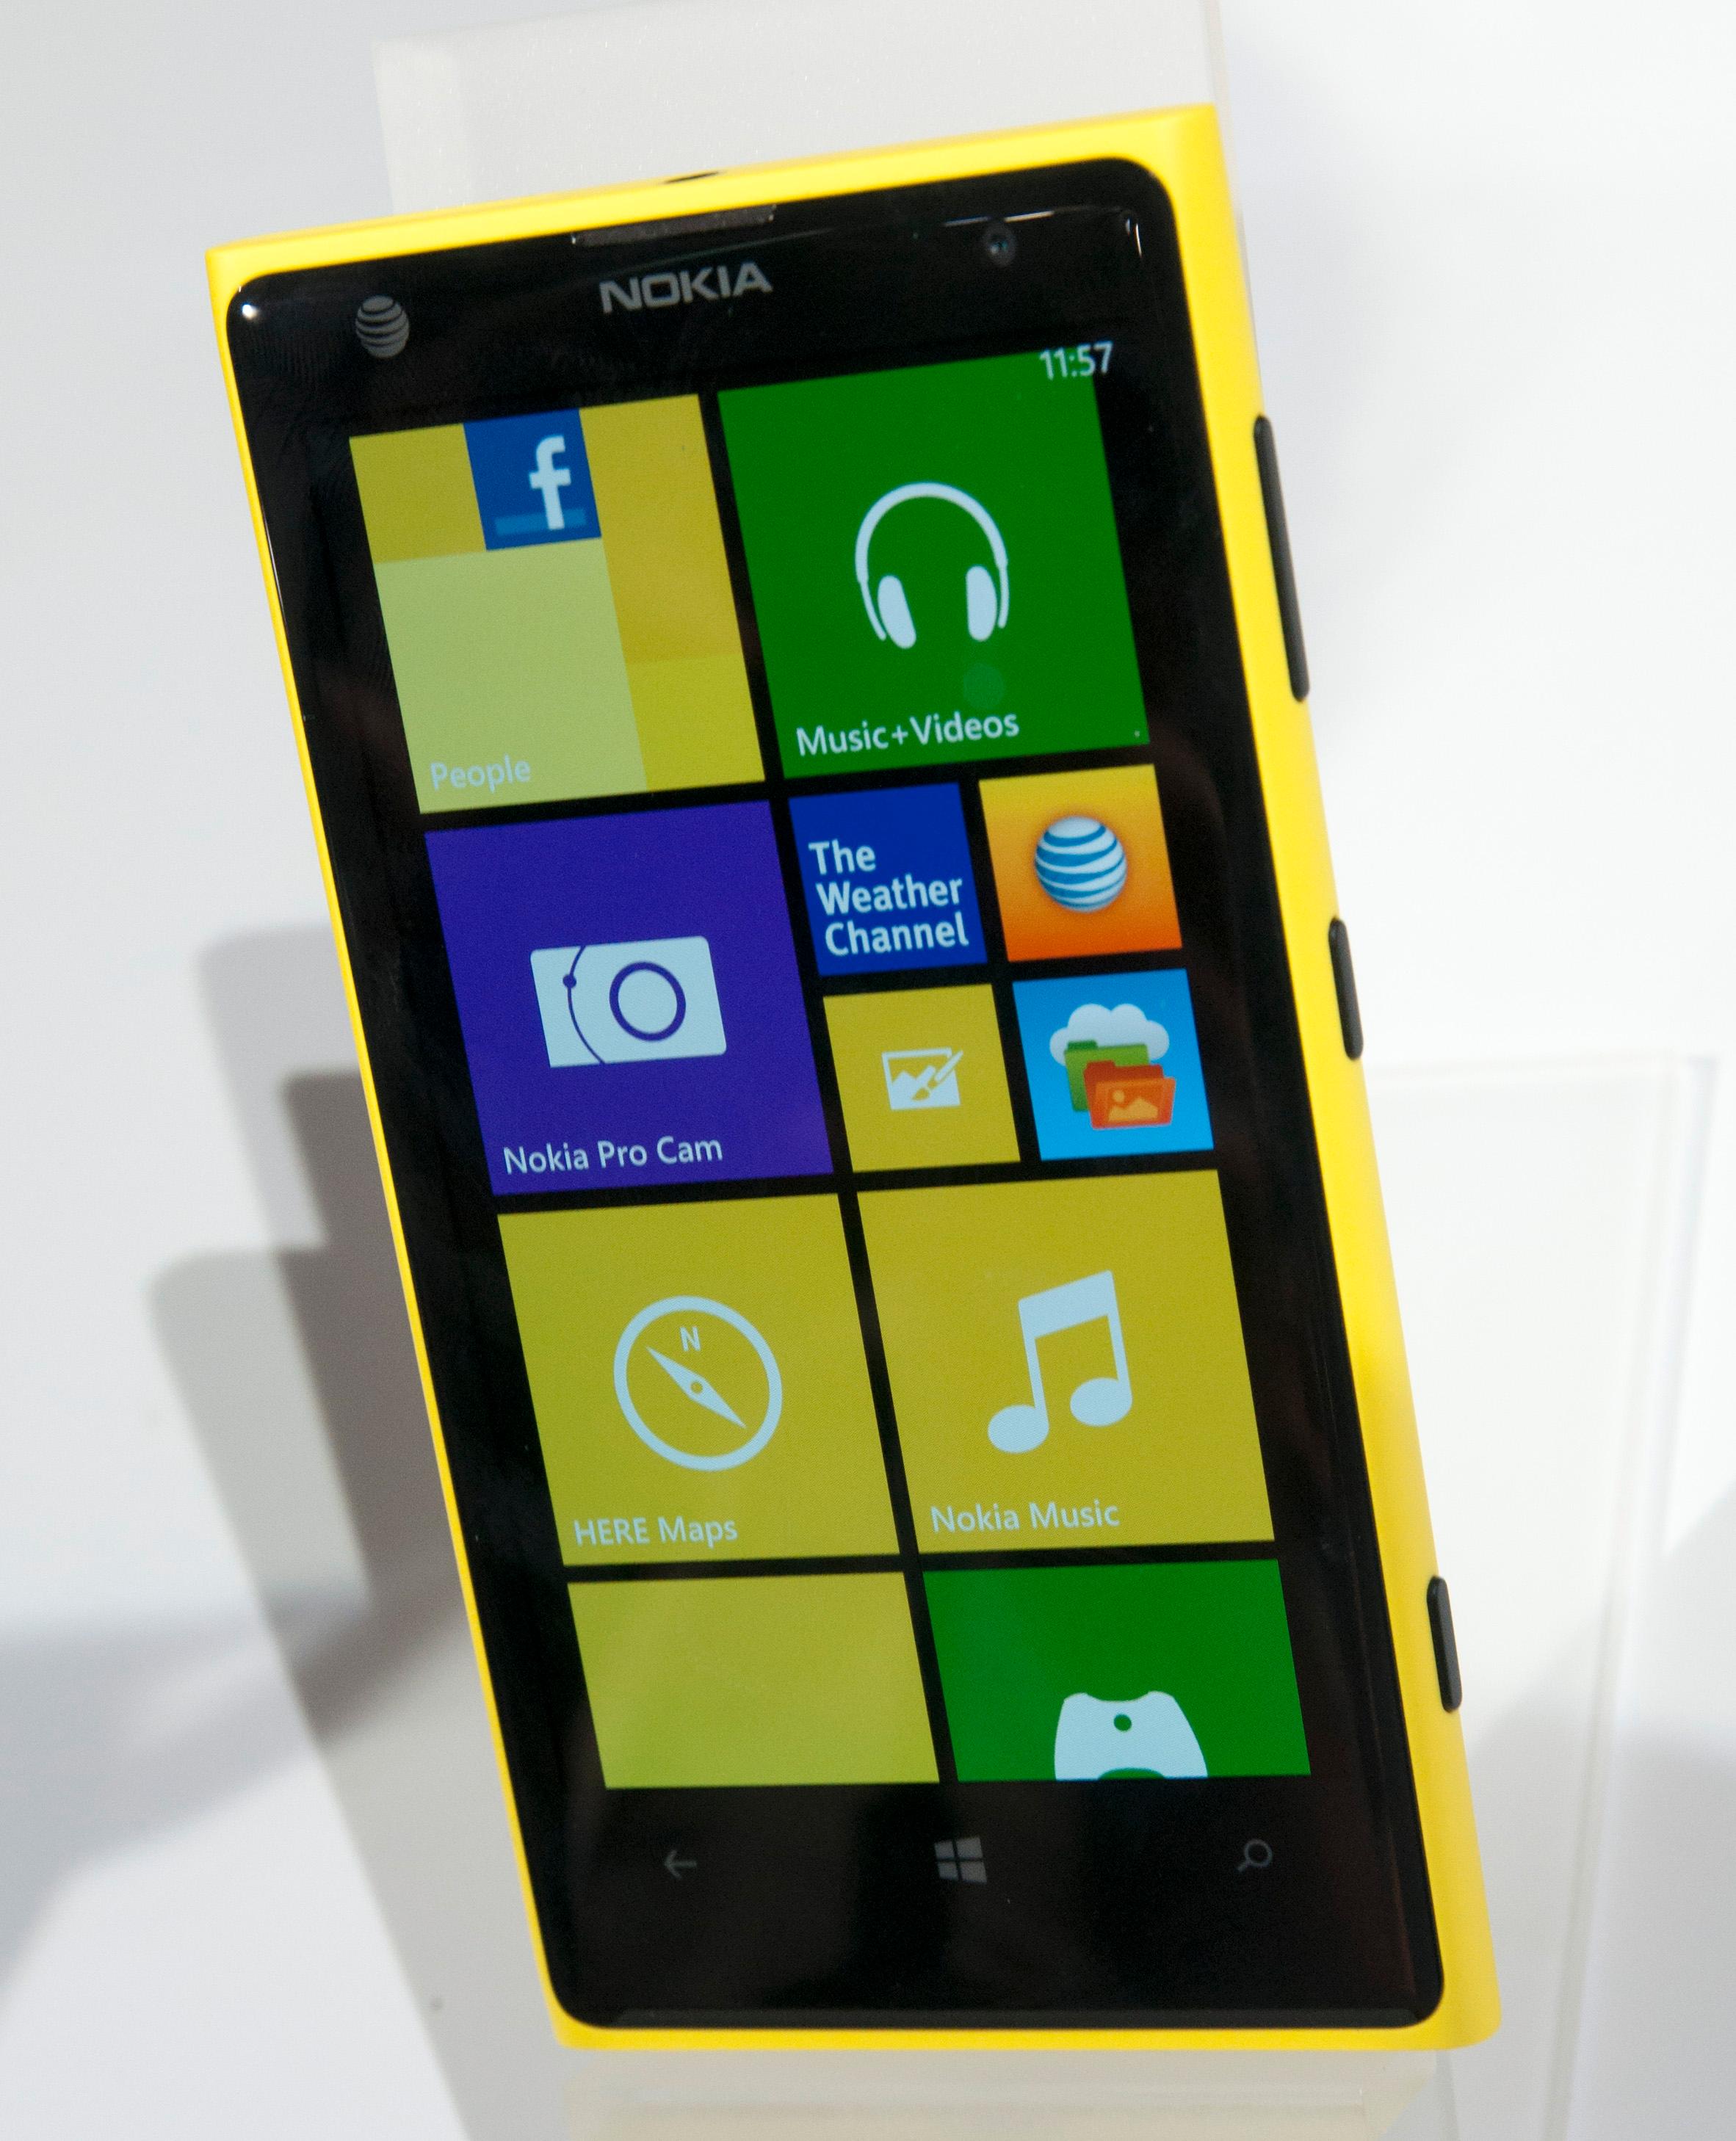 Nokia Lumia 1020 er greit synlig i terrenget i gul utgave.Foto: Finn Jarle Kvalheim, Amobil.no